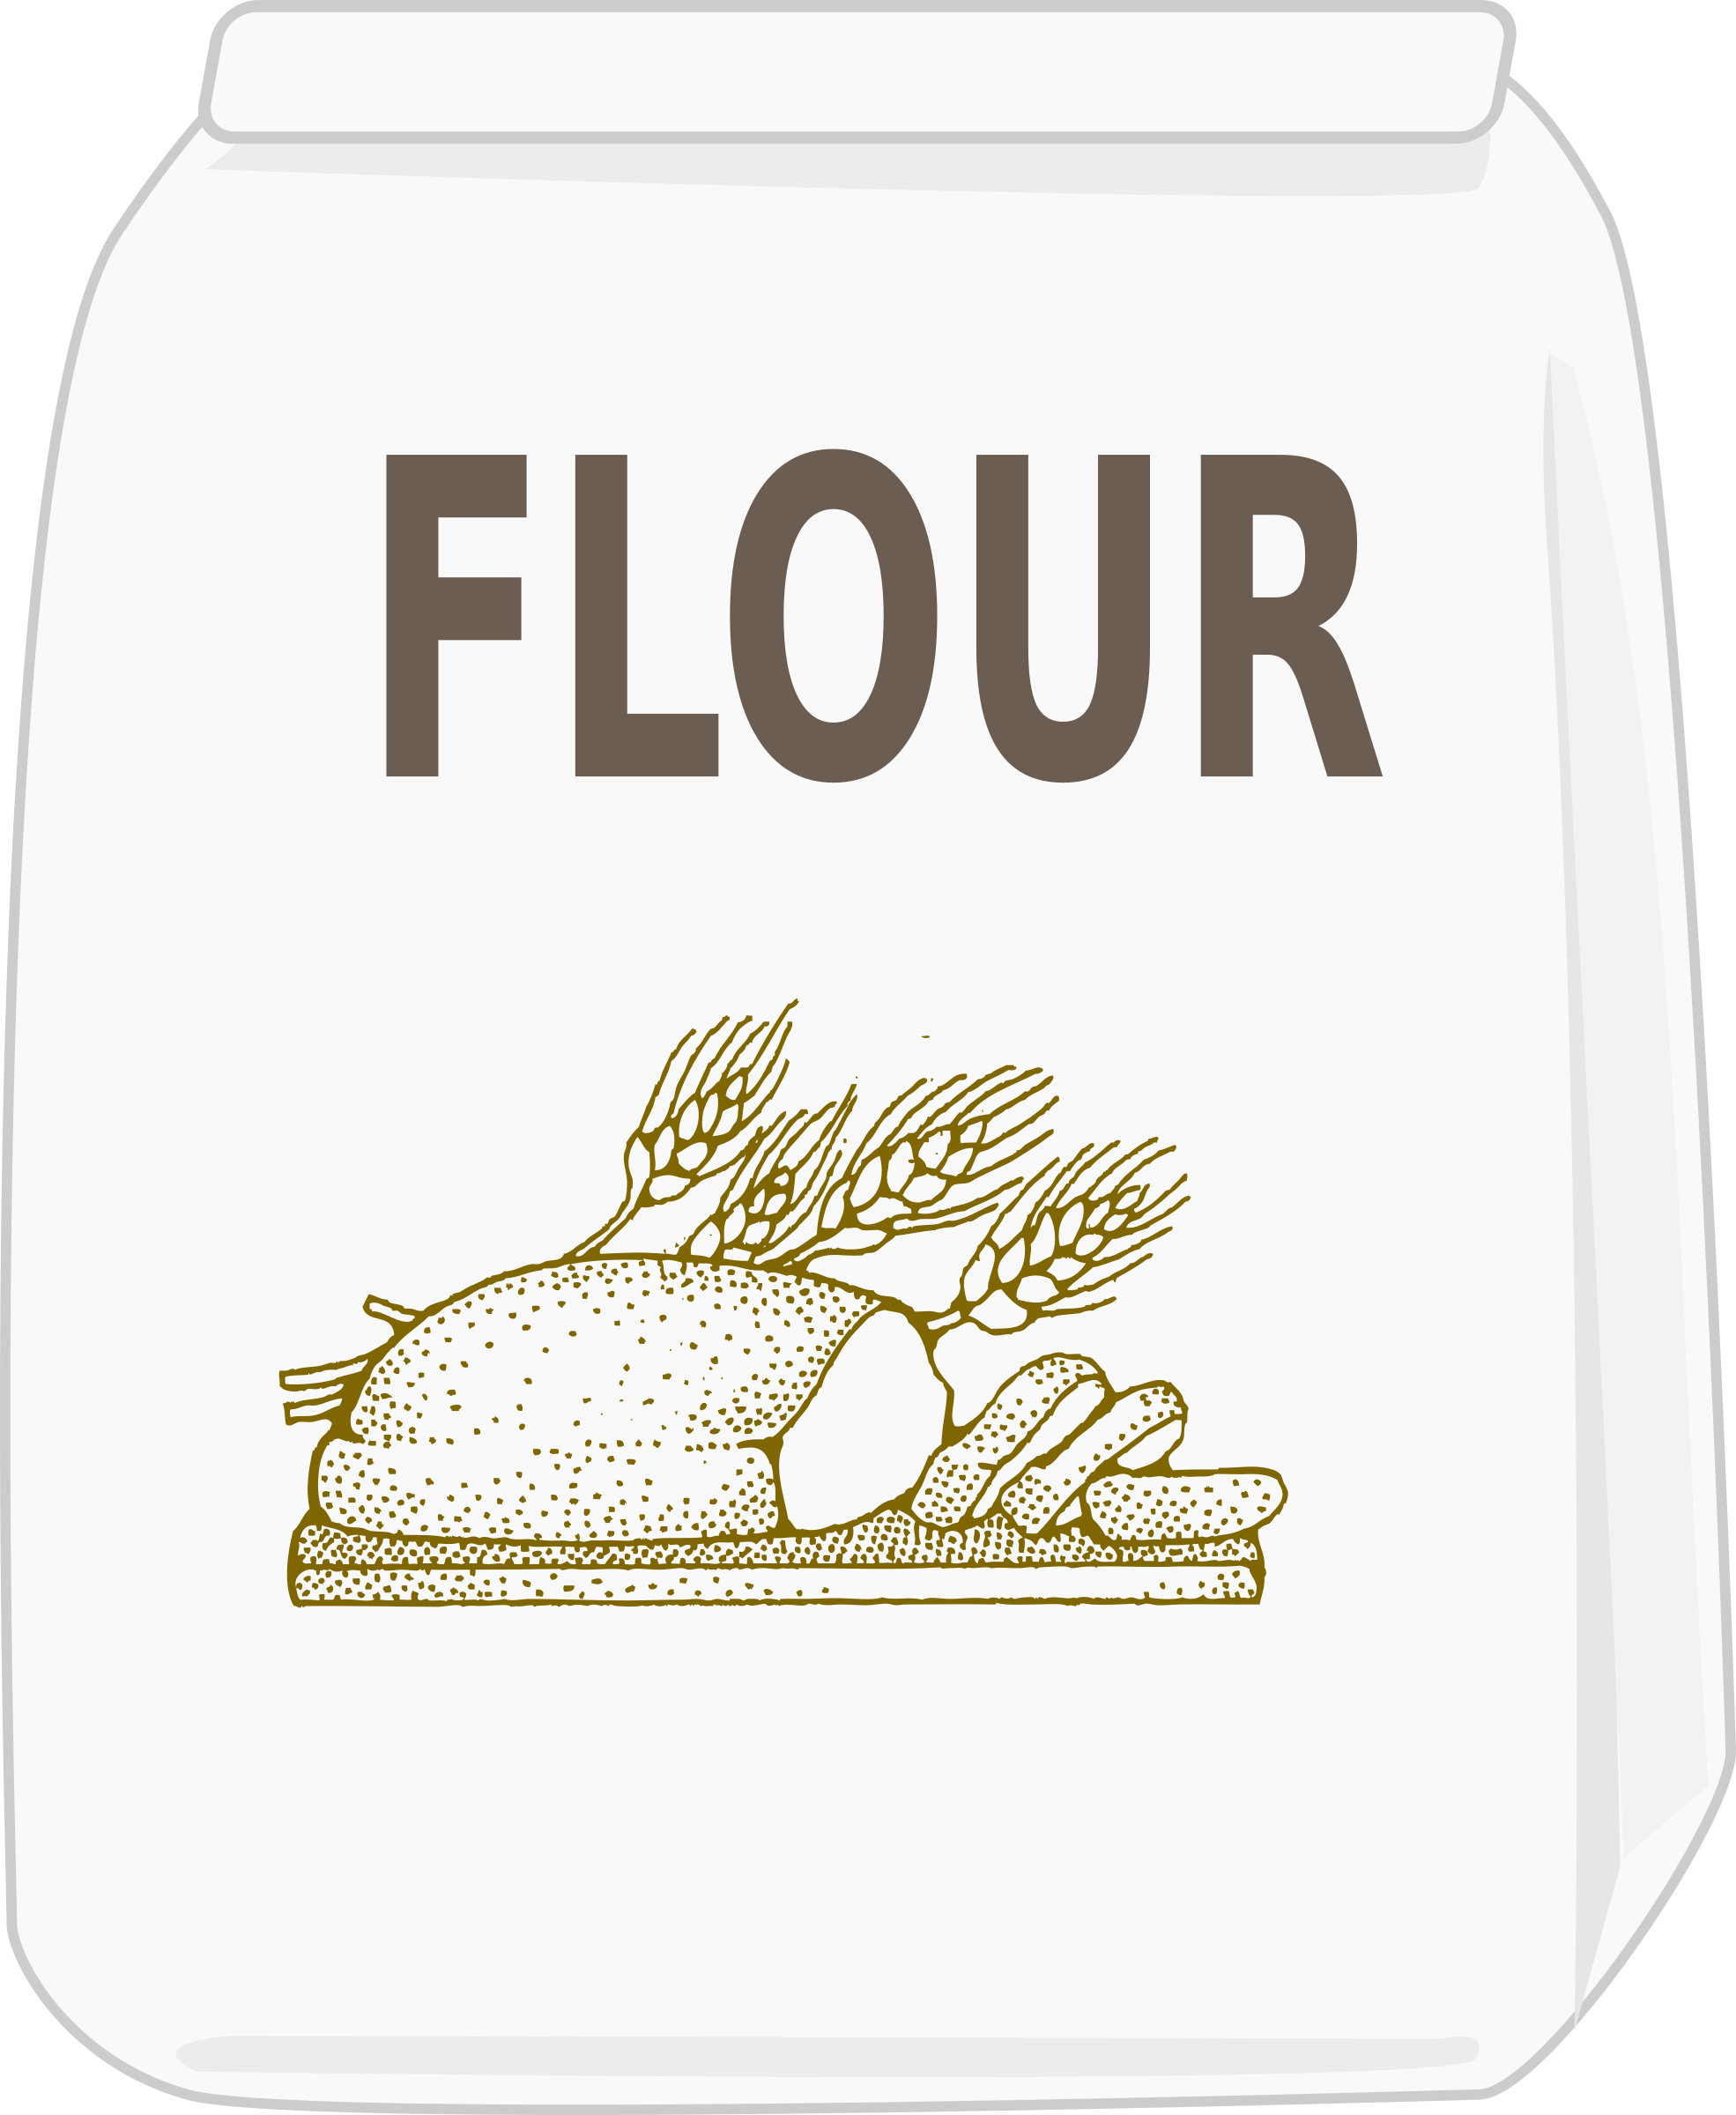 Free Flour Cliparts, Download Free Clip Art, Free Clip Art.